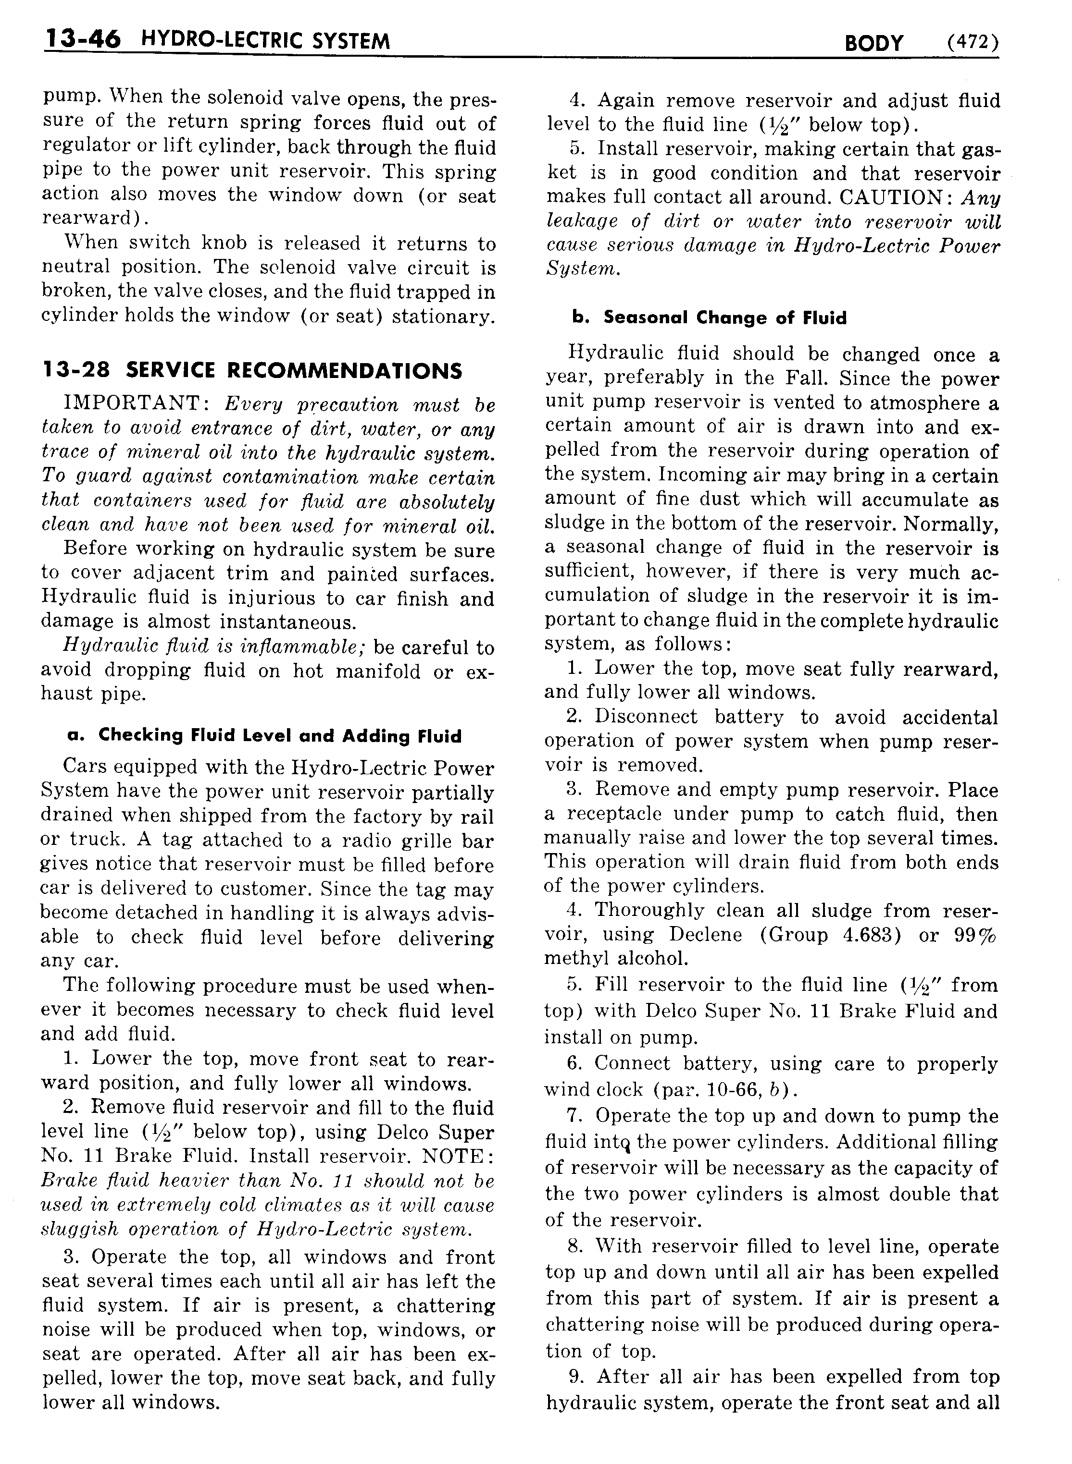 n_14 1951 Buick Shop Manual - Body-046-046.jpg